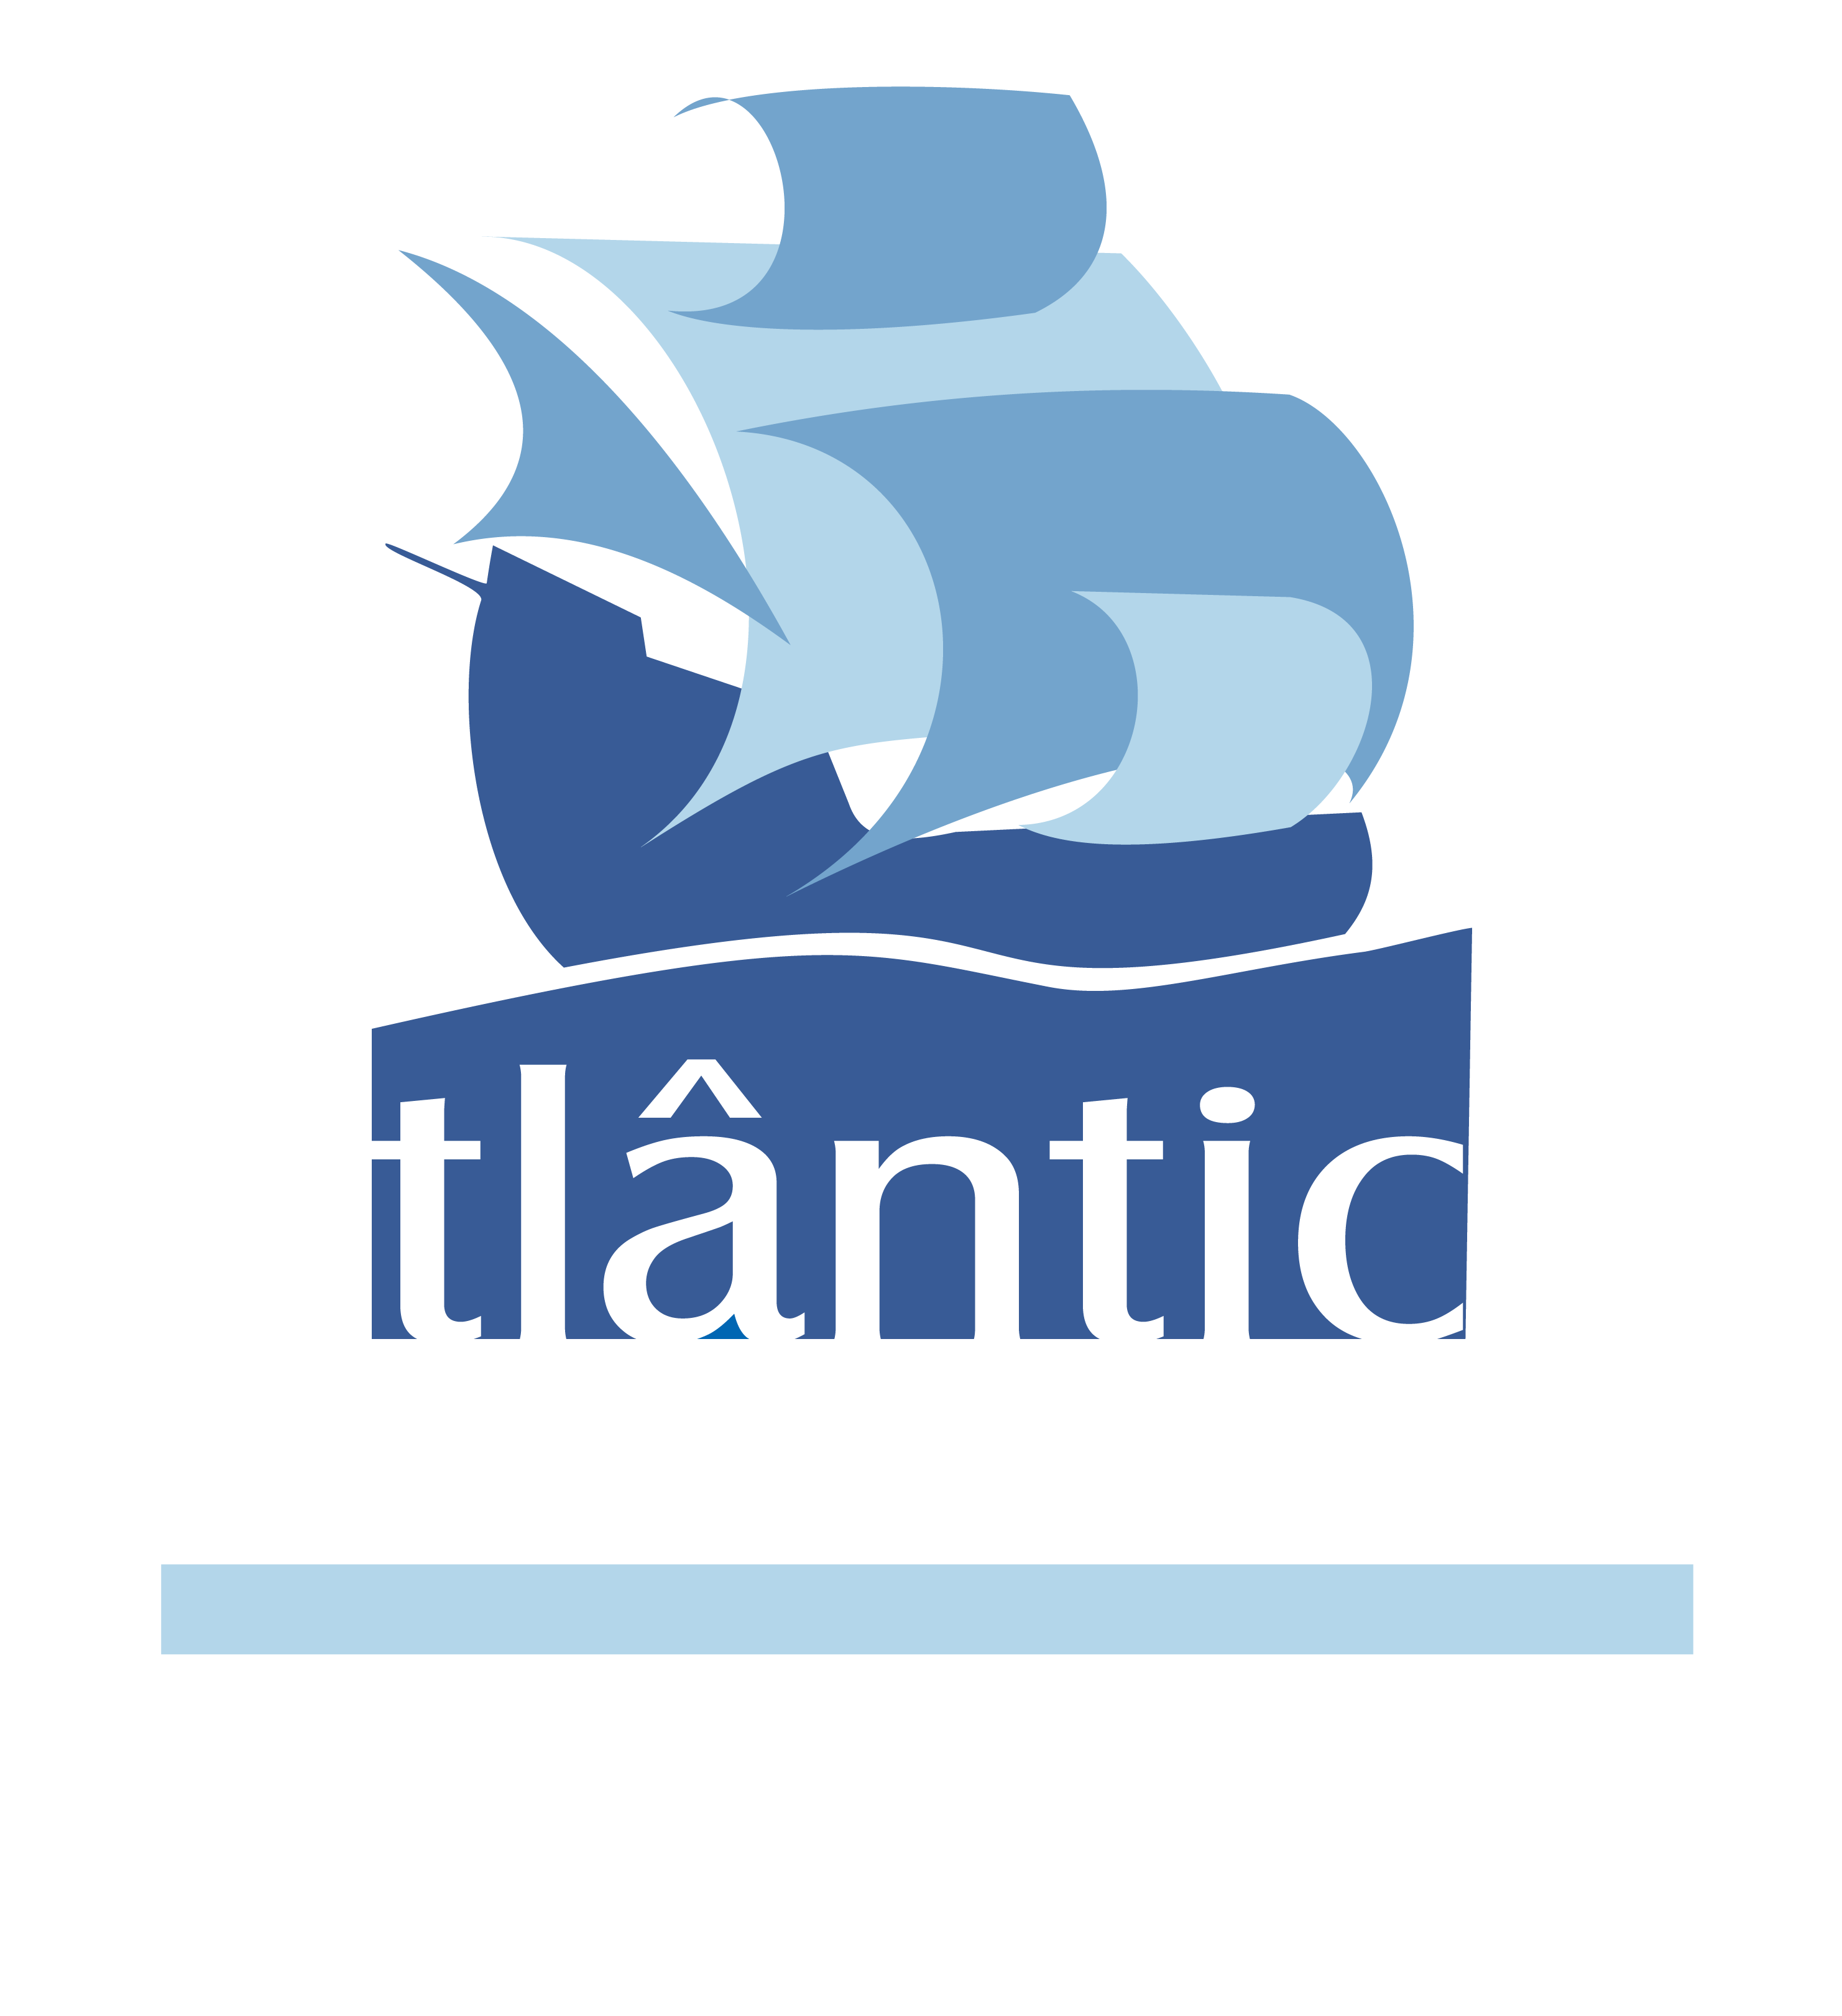 Atlantica Online Brasil